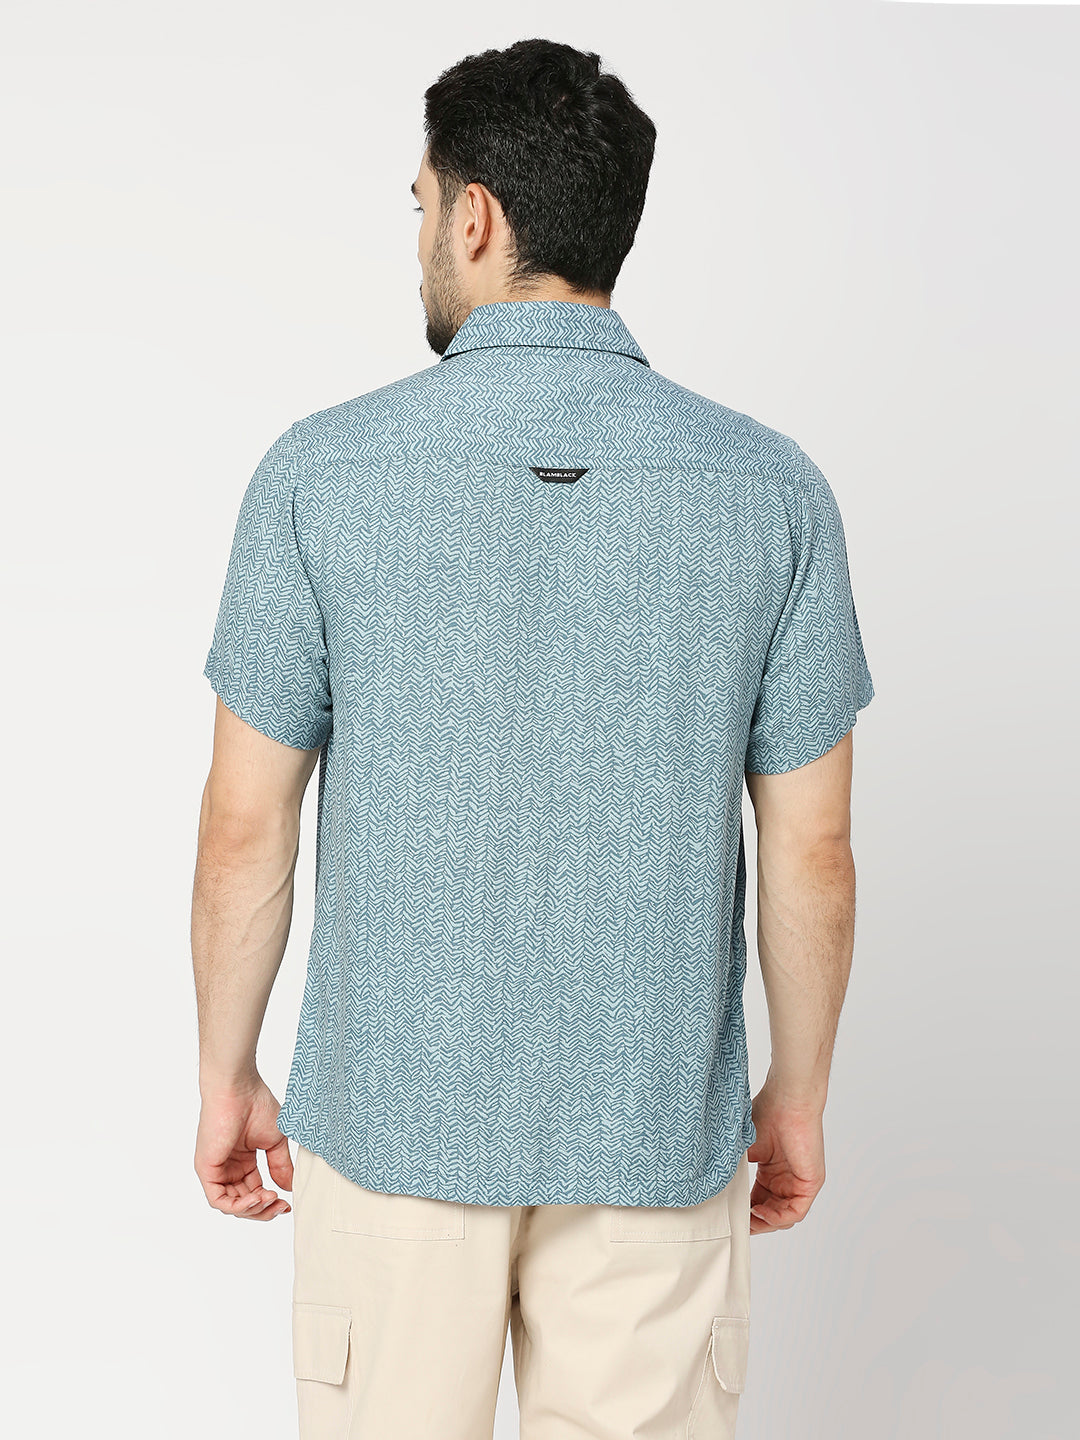 Buy BLAMBLACK Men's printed Crushed Rayon Regular Fit Half Sleeves Spread Collar Shirt